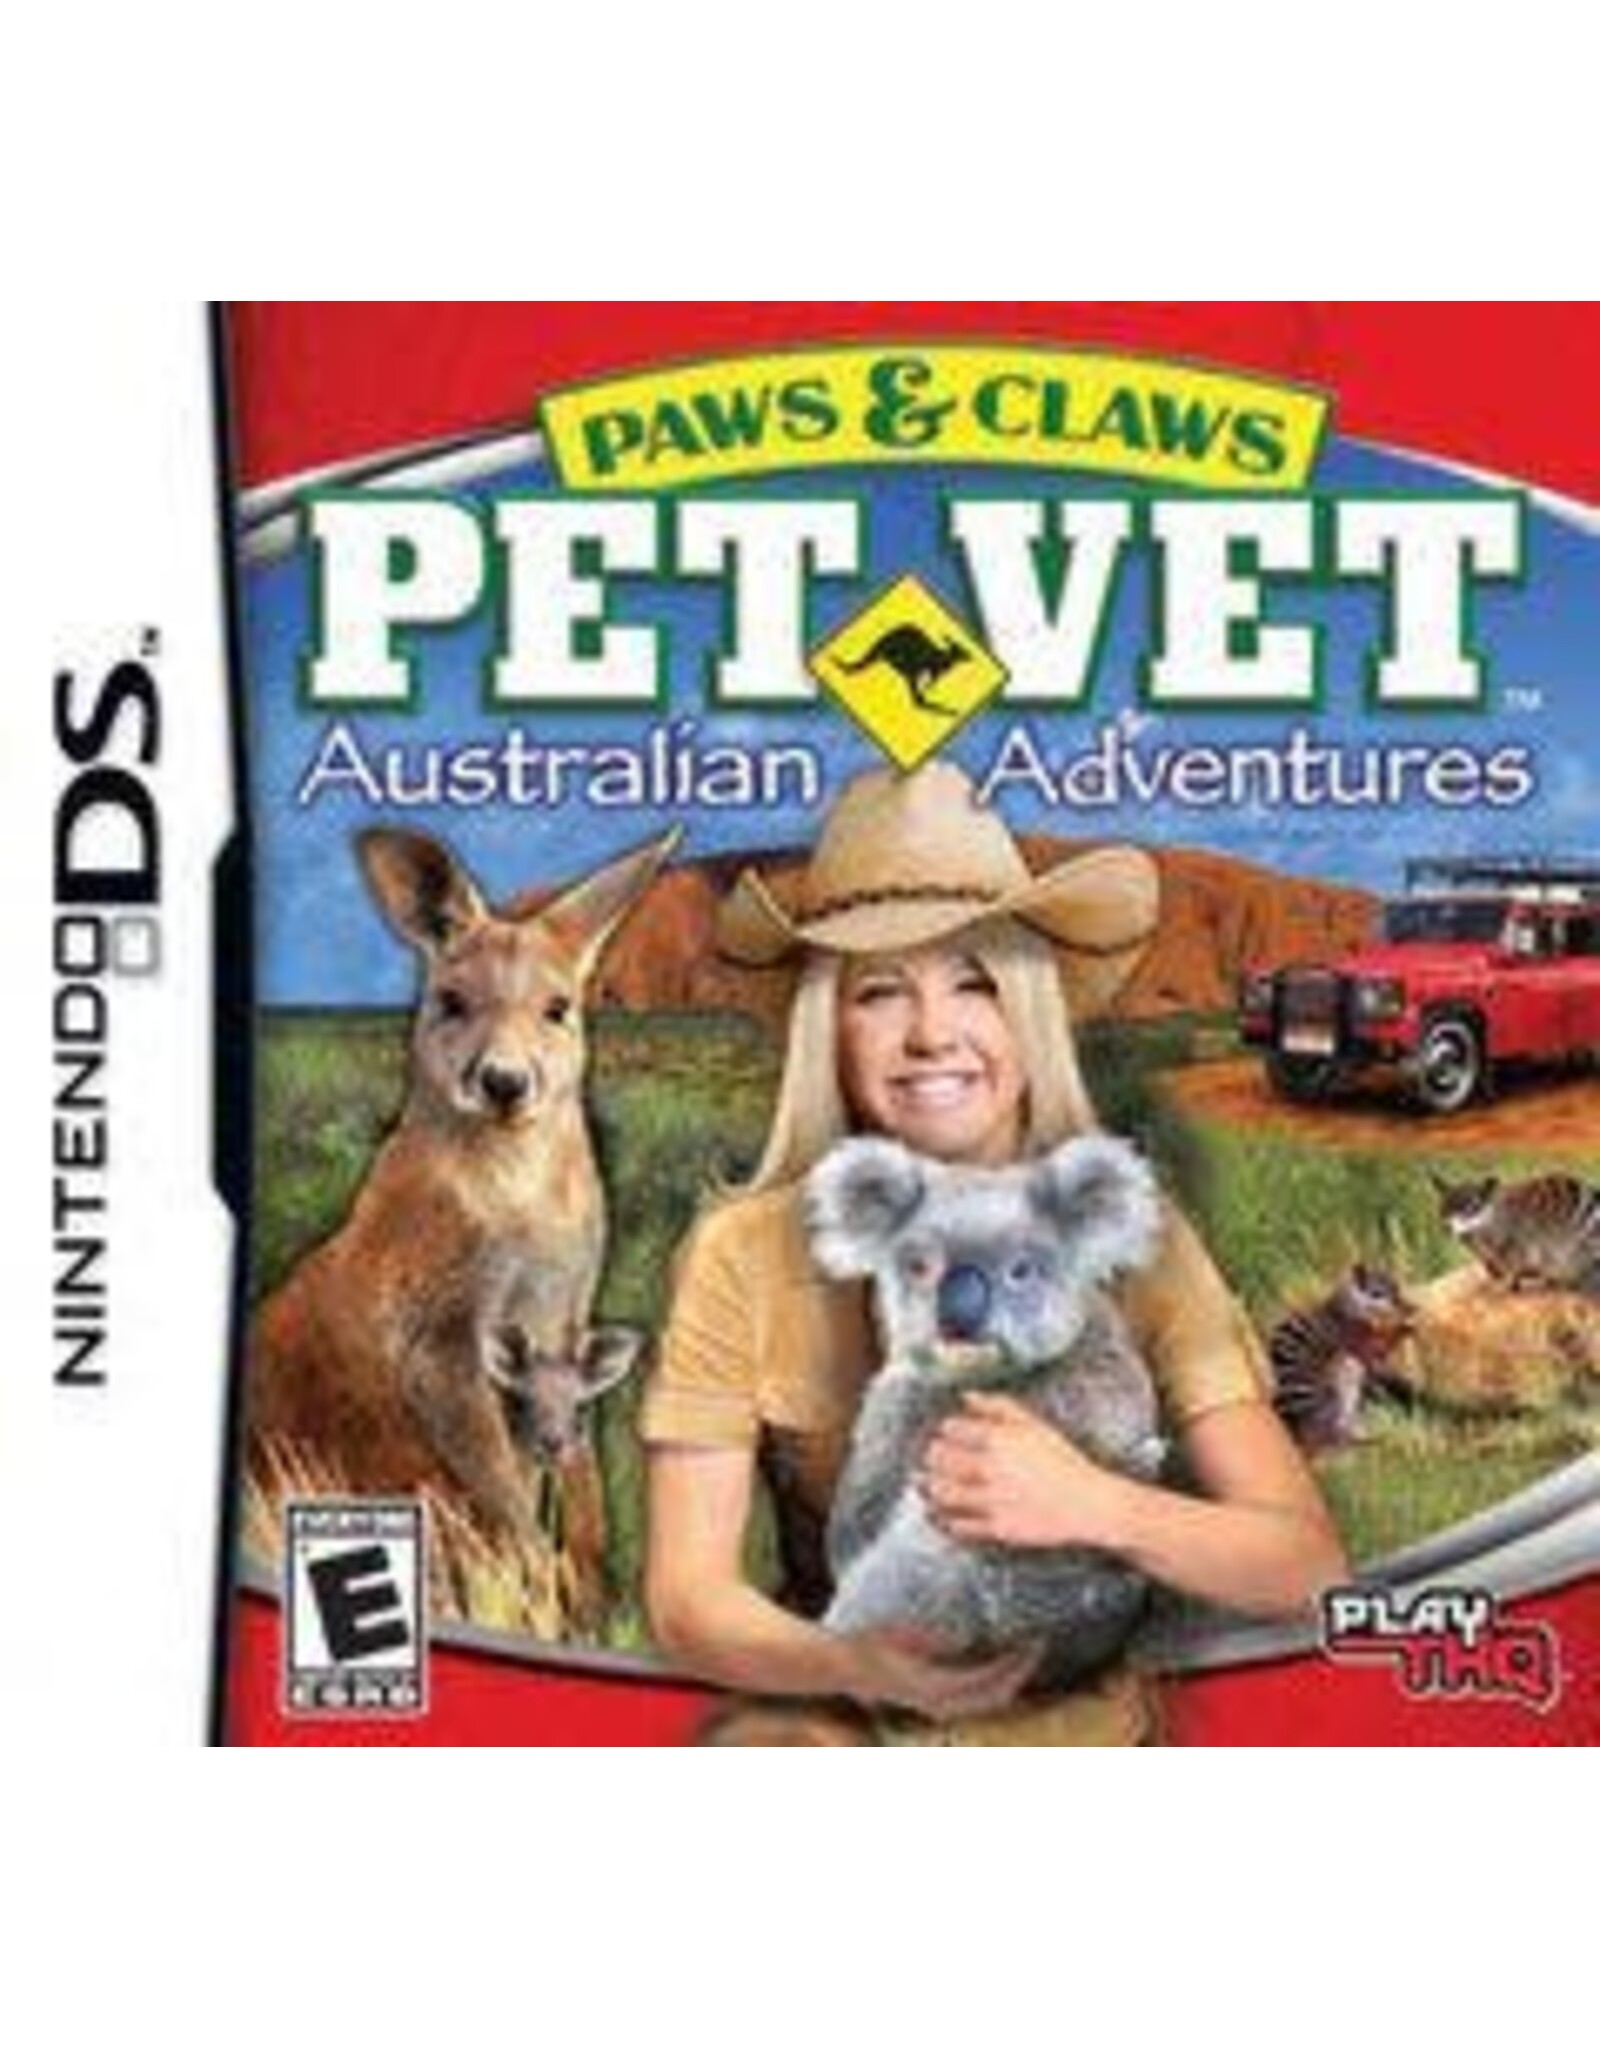 Nintendo DS Paws & Claws Pet Vet: Australian Adventures (Cart Only)